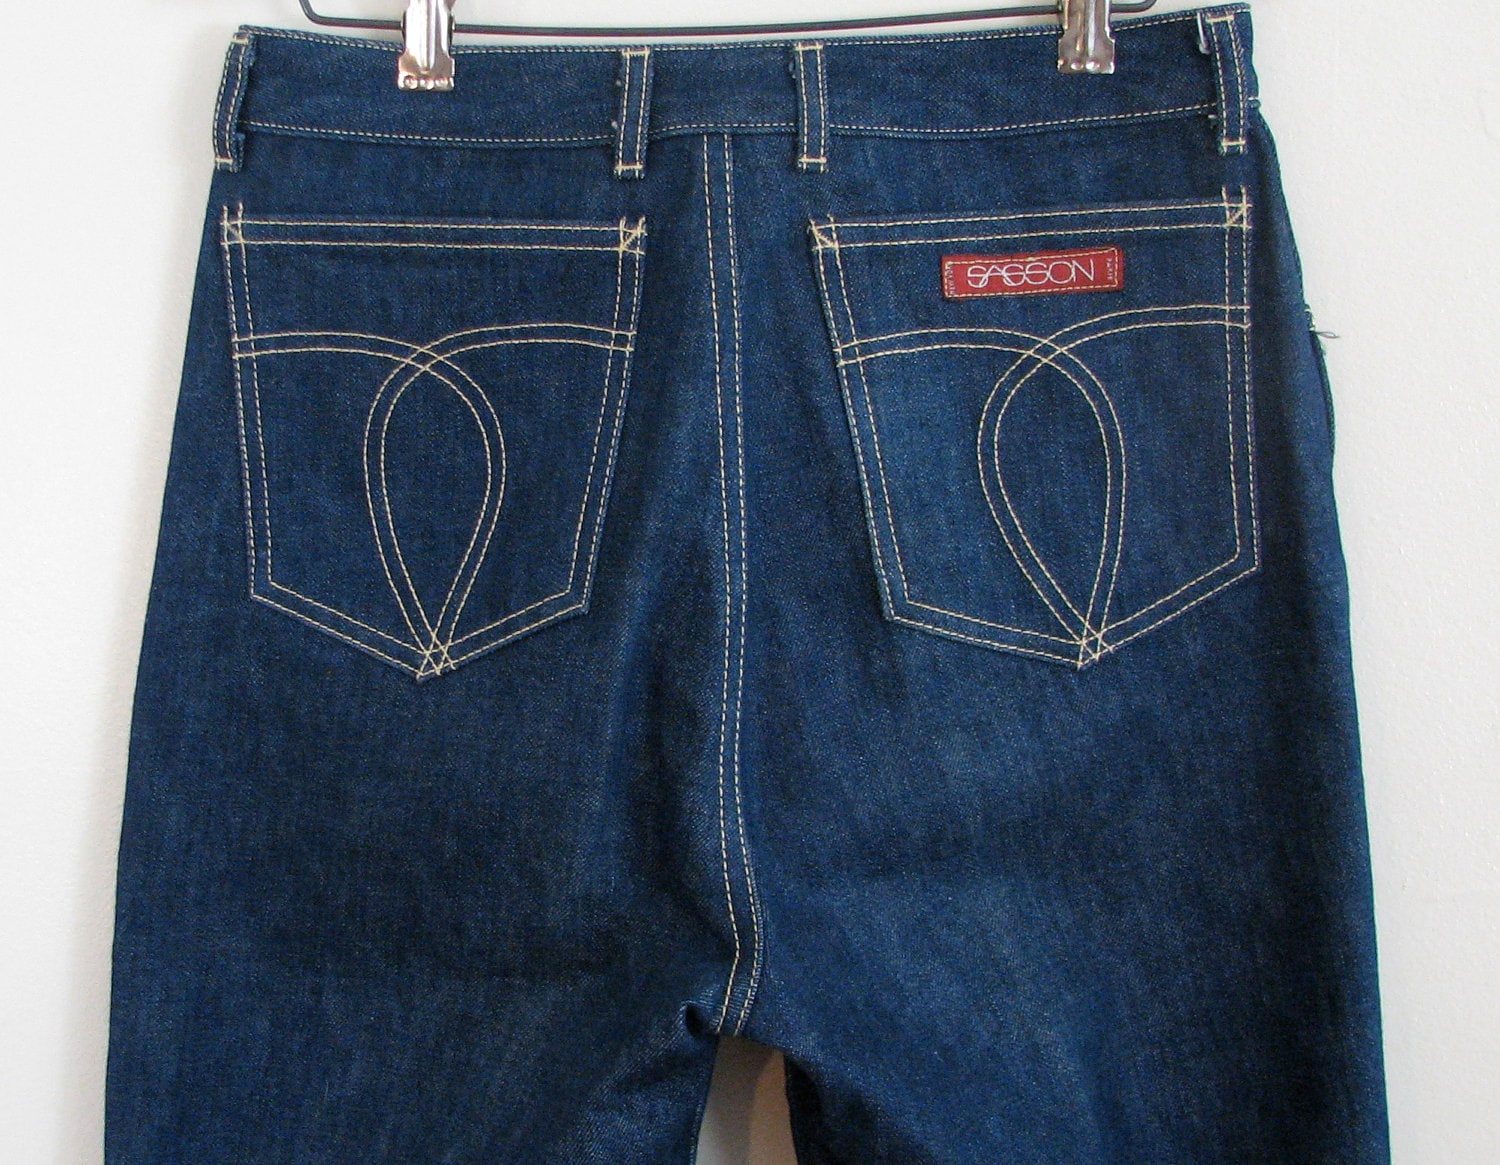 Vintage 70s Sasson Jeans Oooh La La By Youdigitthemost